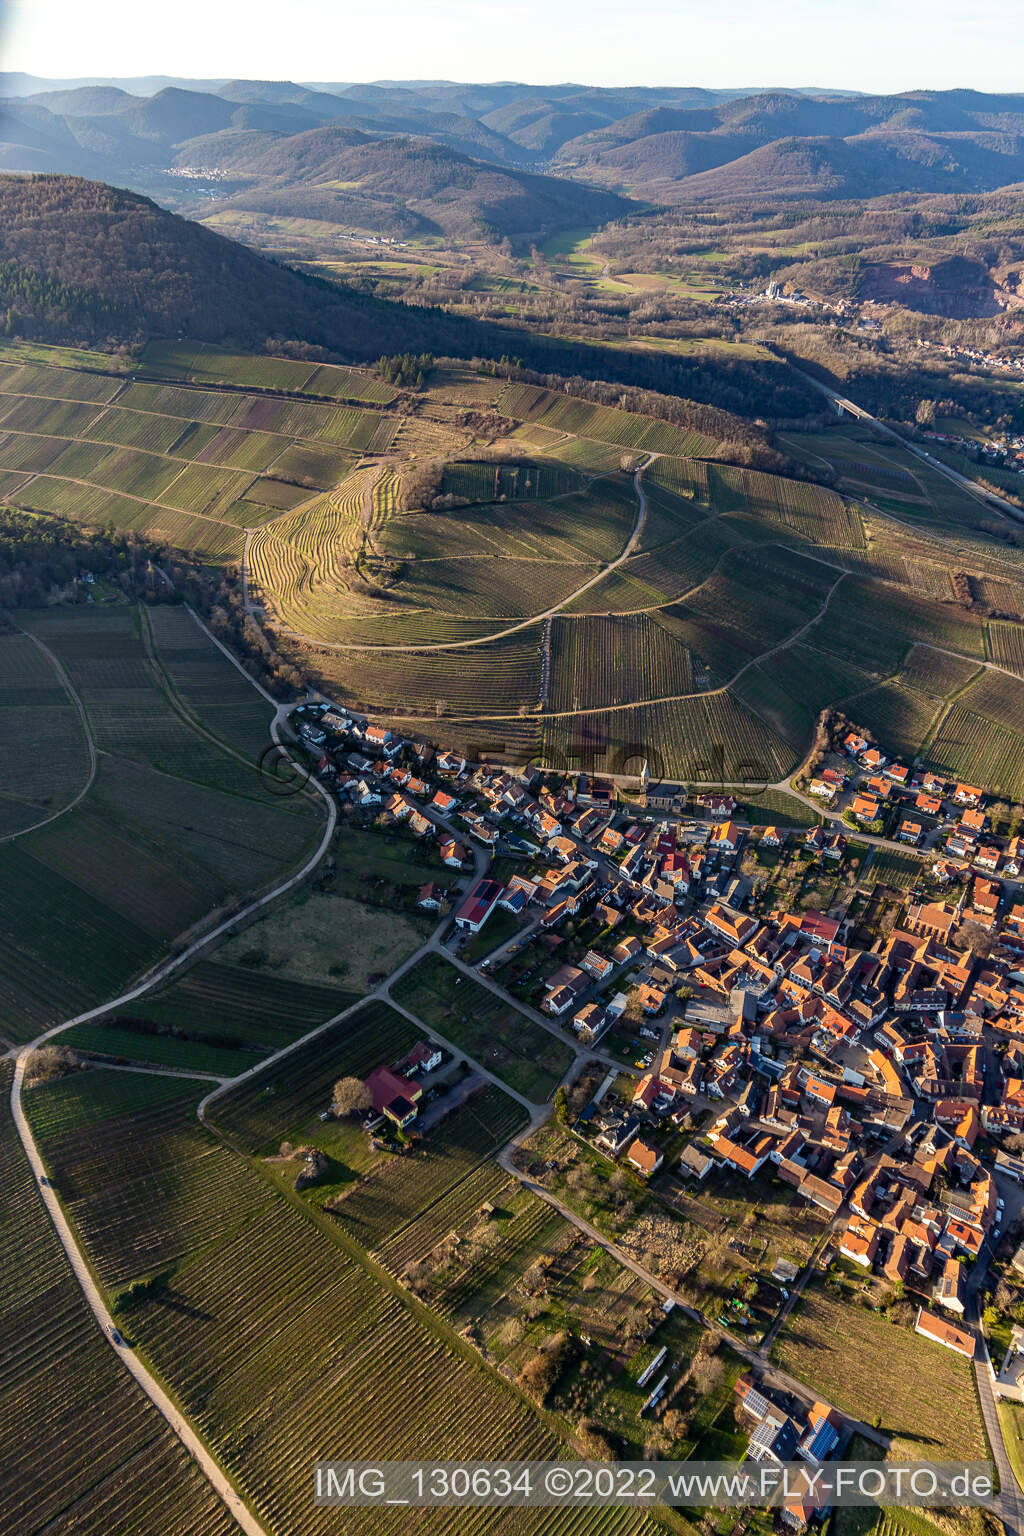 Aerial view of Keshdebush in Birkweiler in the state Rhineland-Palatinate, Germany